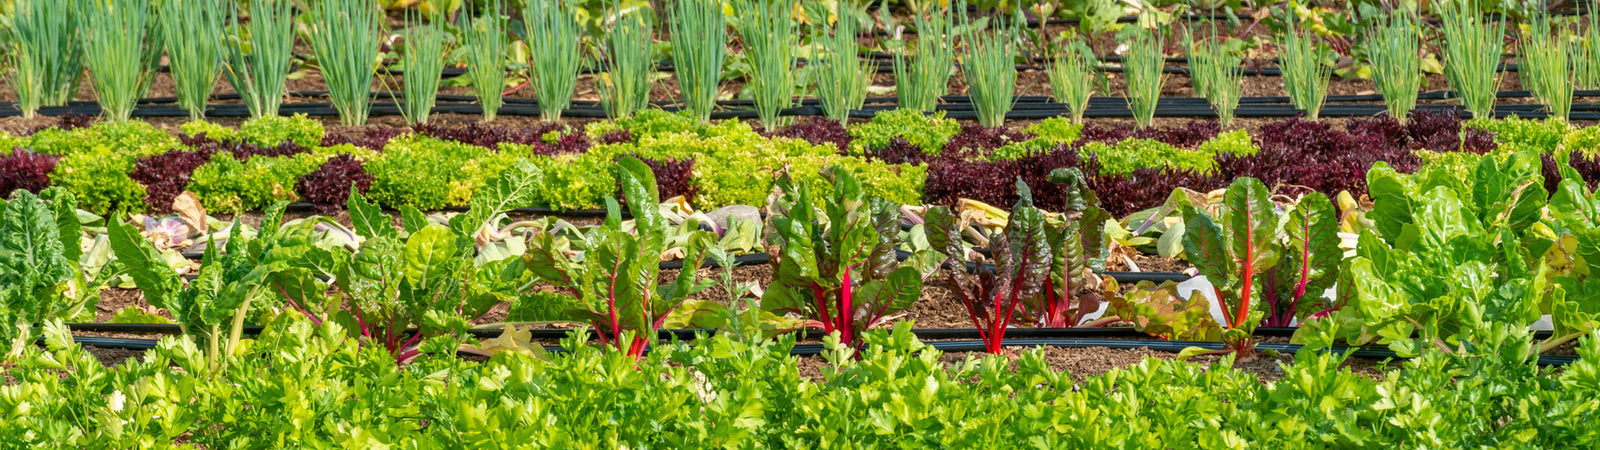 Backyard Farming Ideas for Aspiring Urban Growers